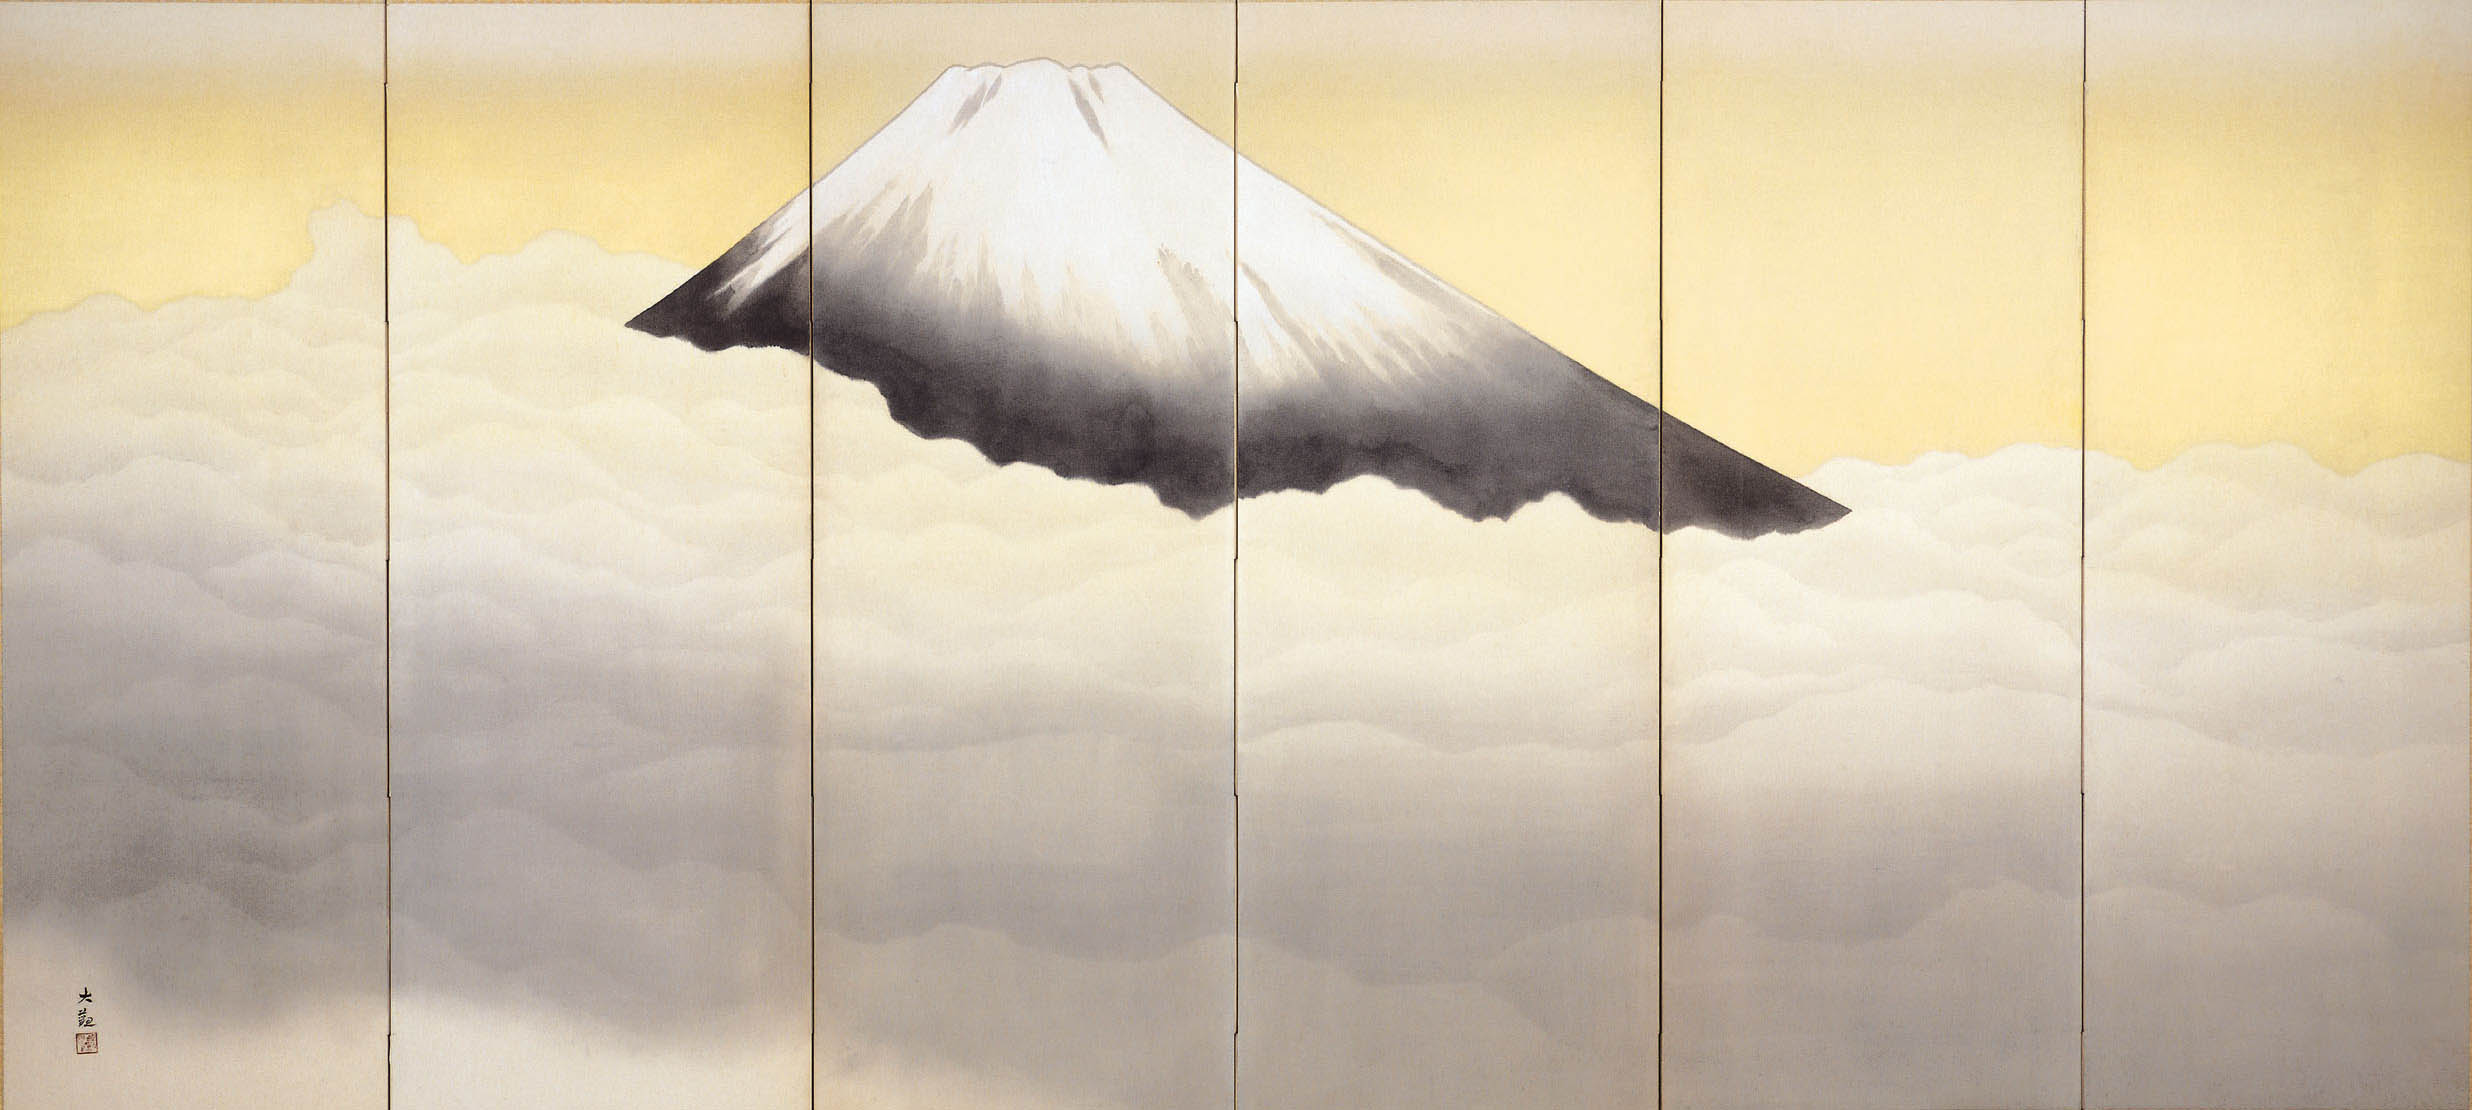 (c) The Dry Landscape Garden, Yokoyama Taikan "Mt. Fuji" (1932)